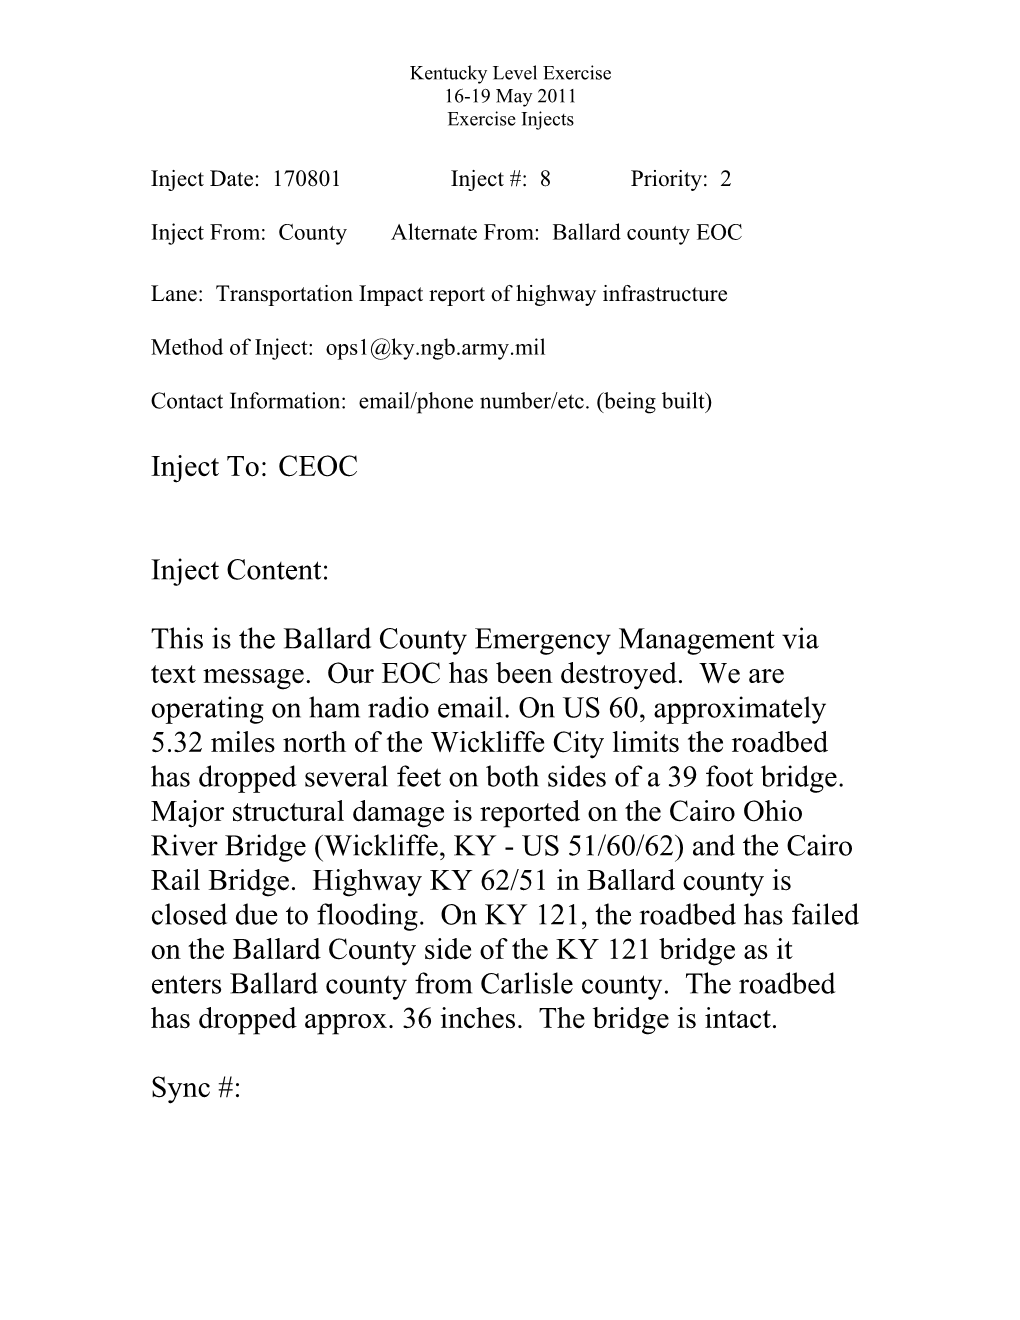 Inject From: Countyalternate From: Ballard County EOC